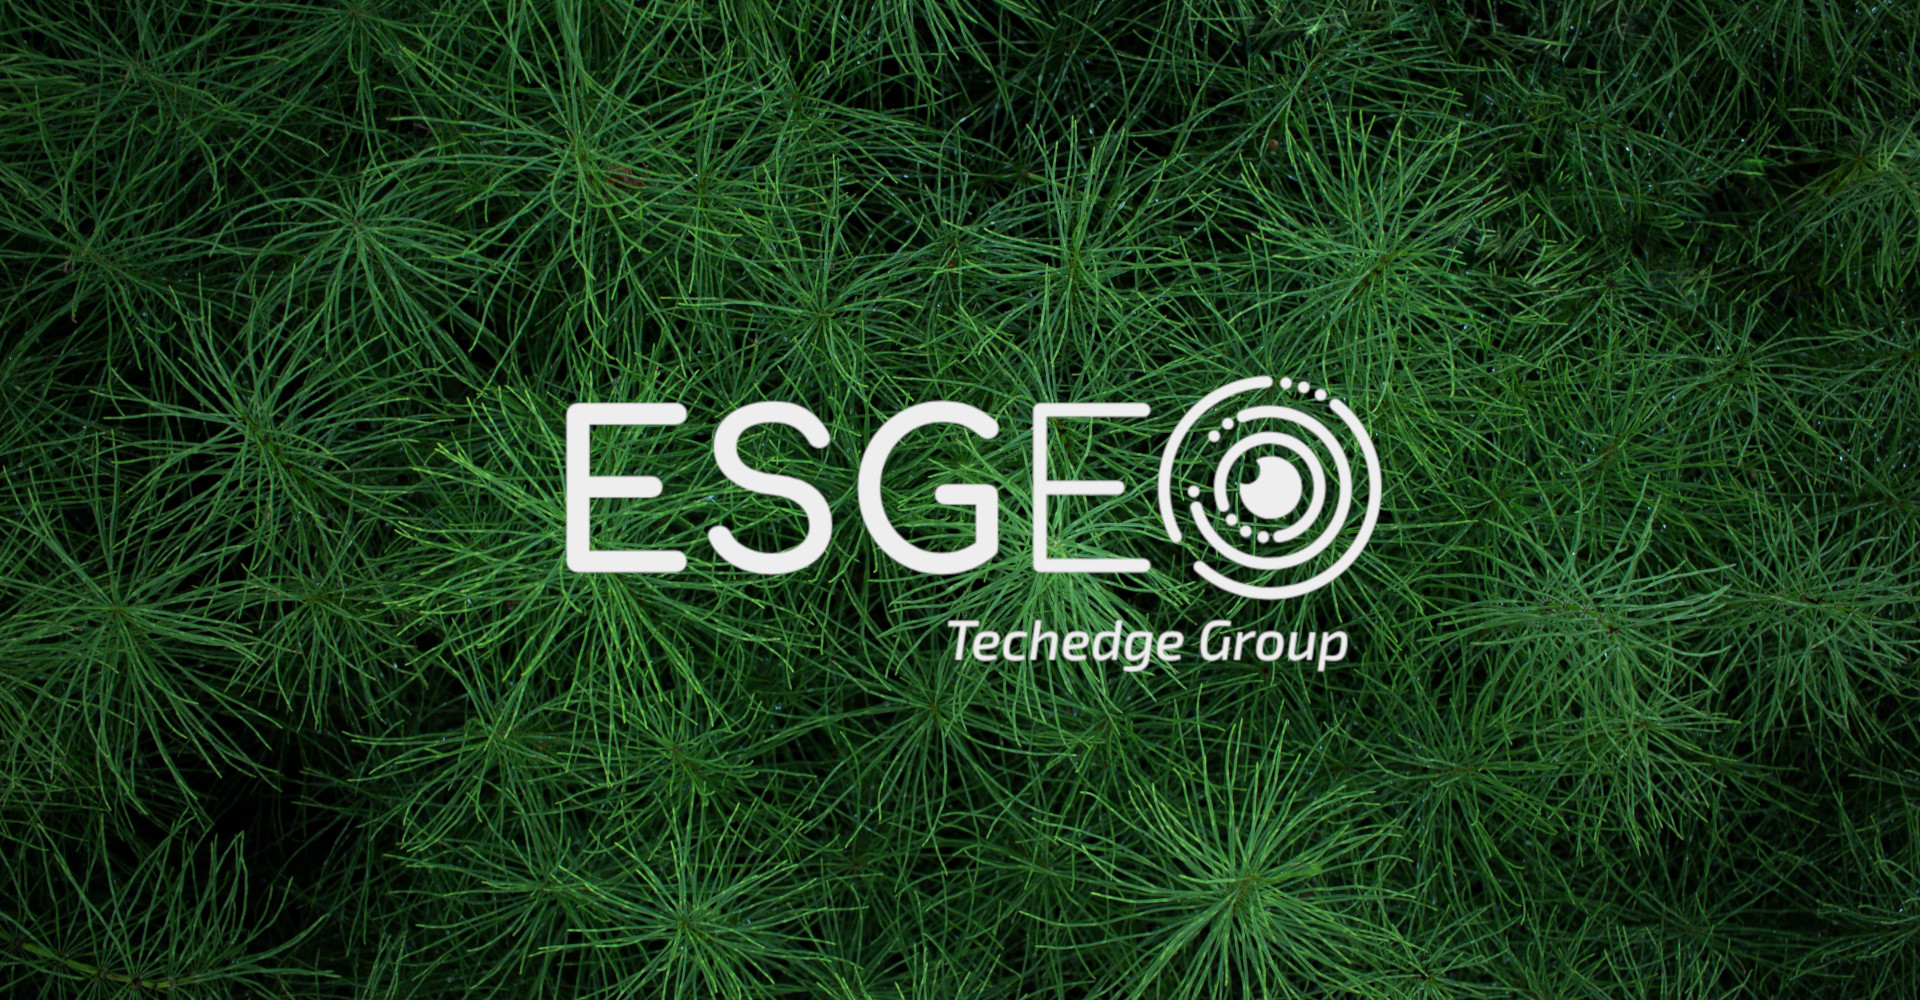 Techedge welcomes ESGeo, the sustainability intelligence platform